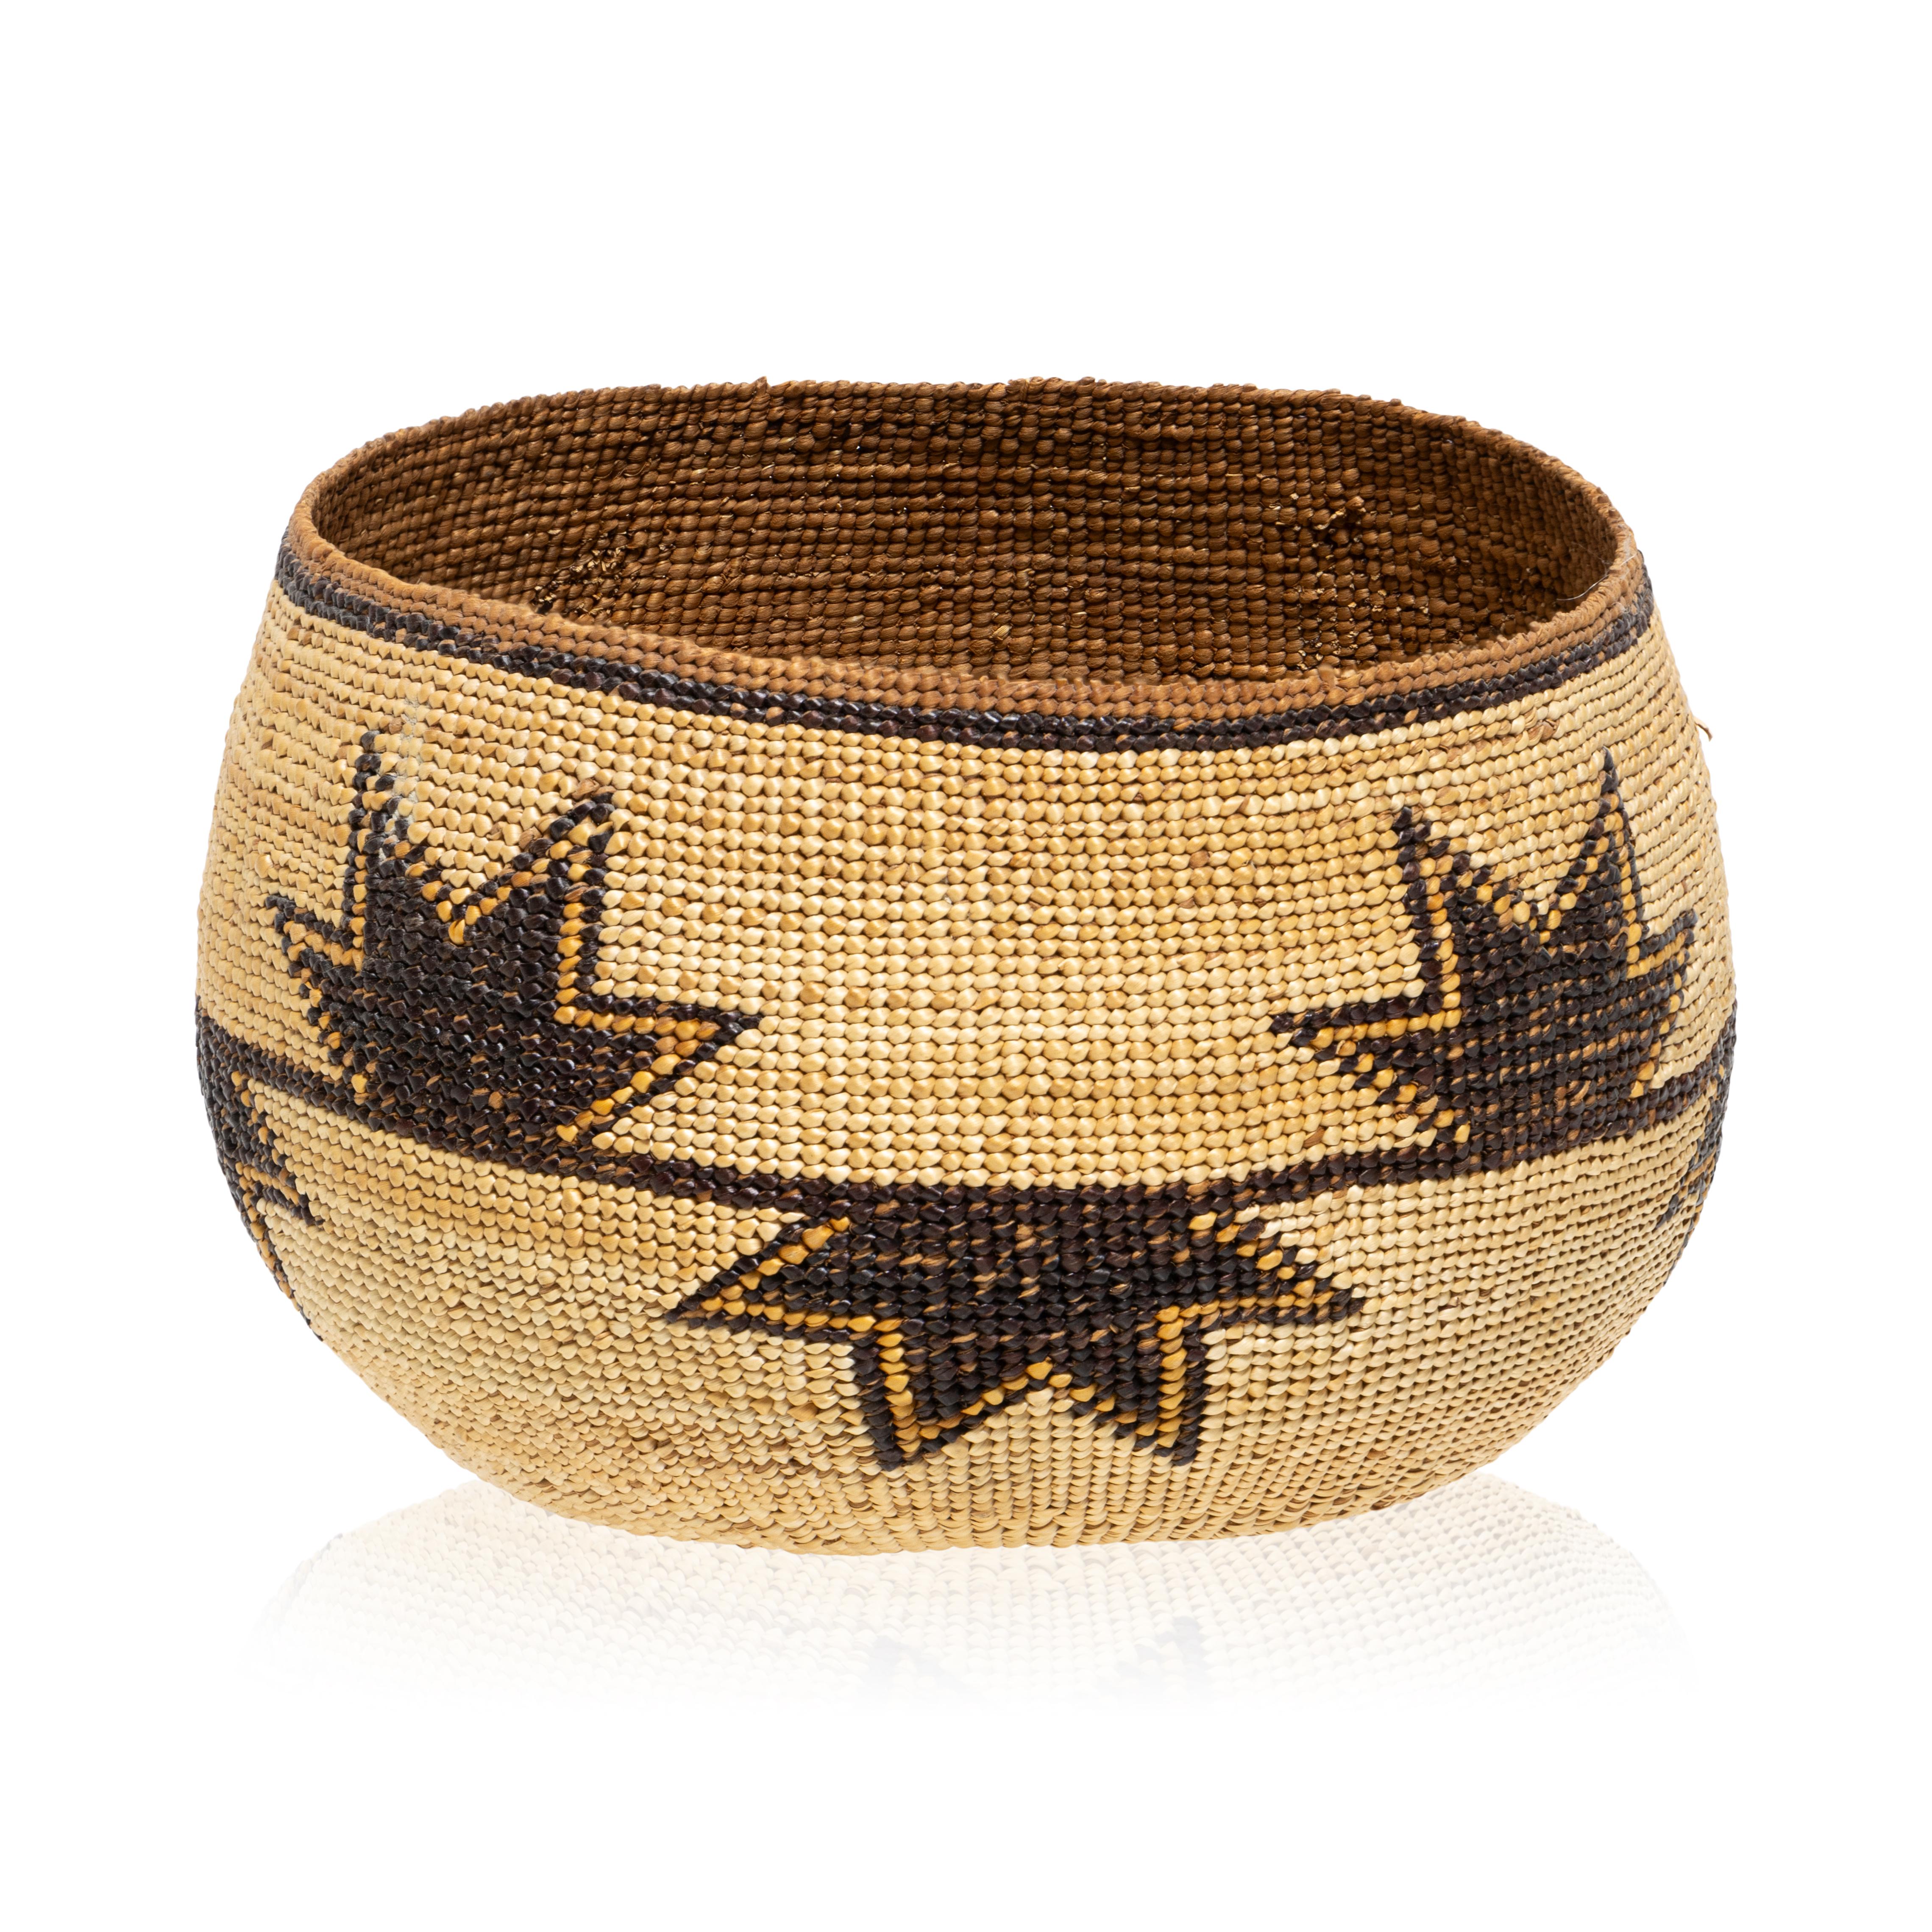 California Hupa/Yurok hat polychrome basket. Very nice condition. Early 20th Century.  5 1/2